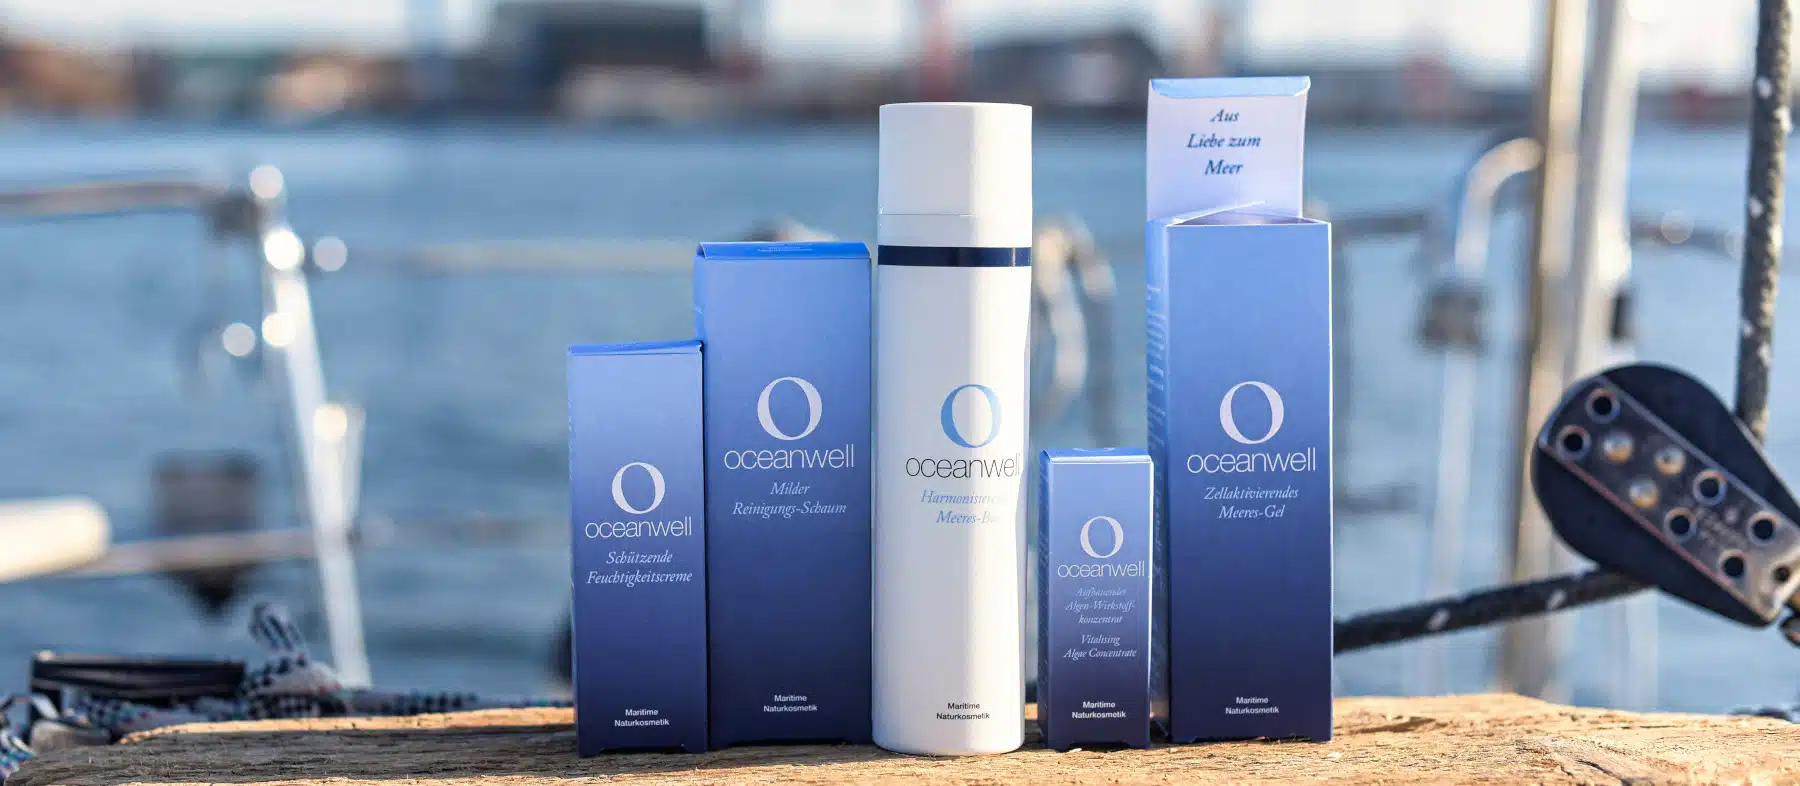 oceanwell kosmetik produkte Kosmetik-Studios